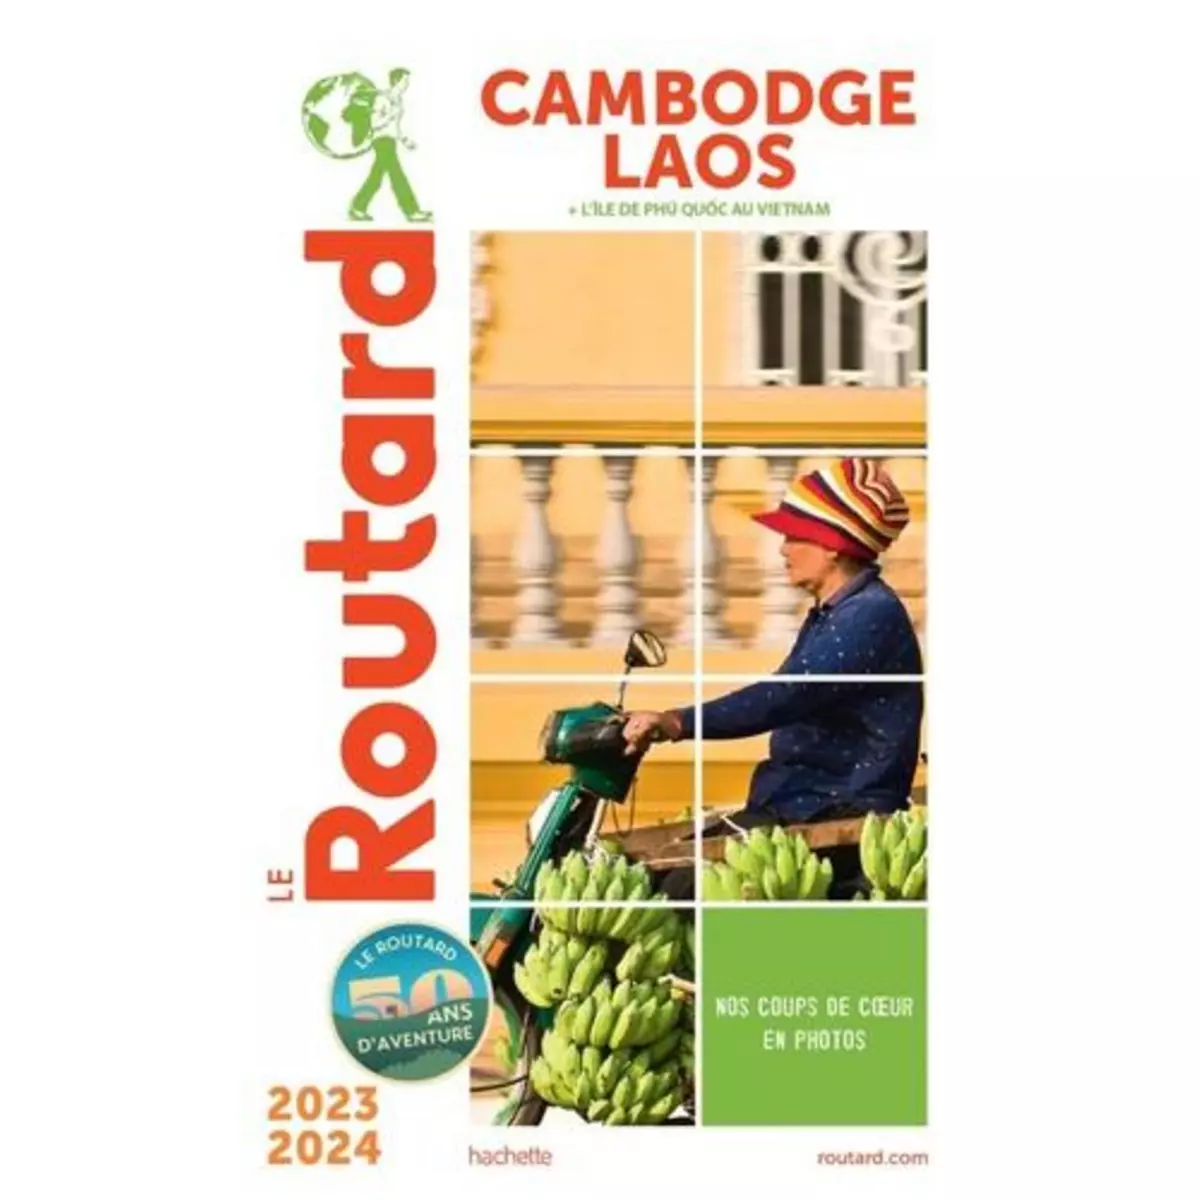  CAMBODGE, LAOS. EDITION 2023-2024, Le Routard